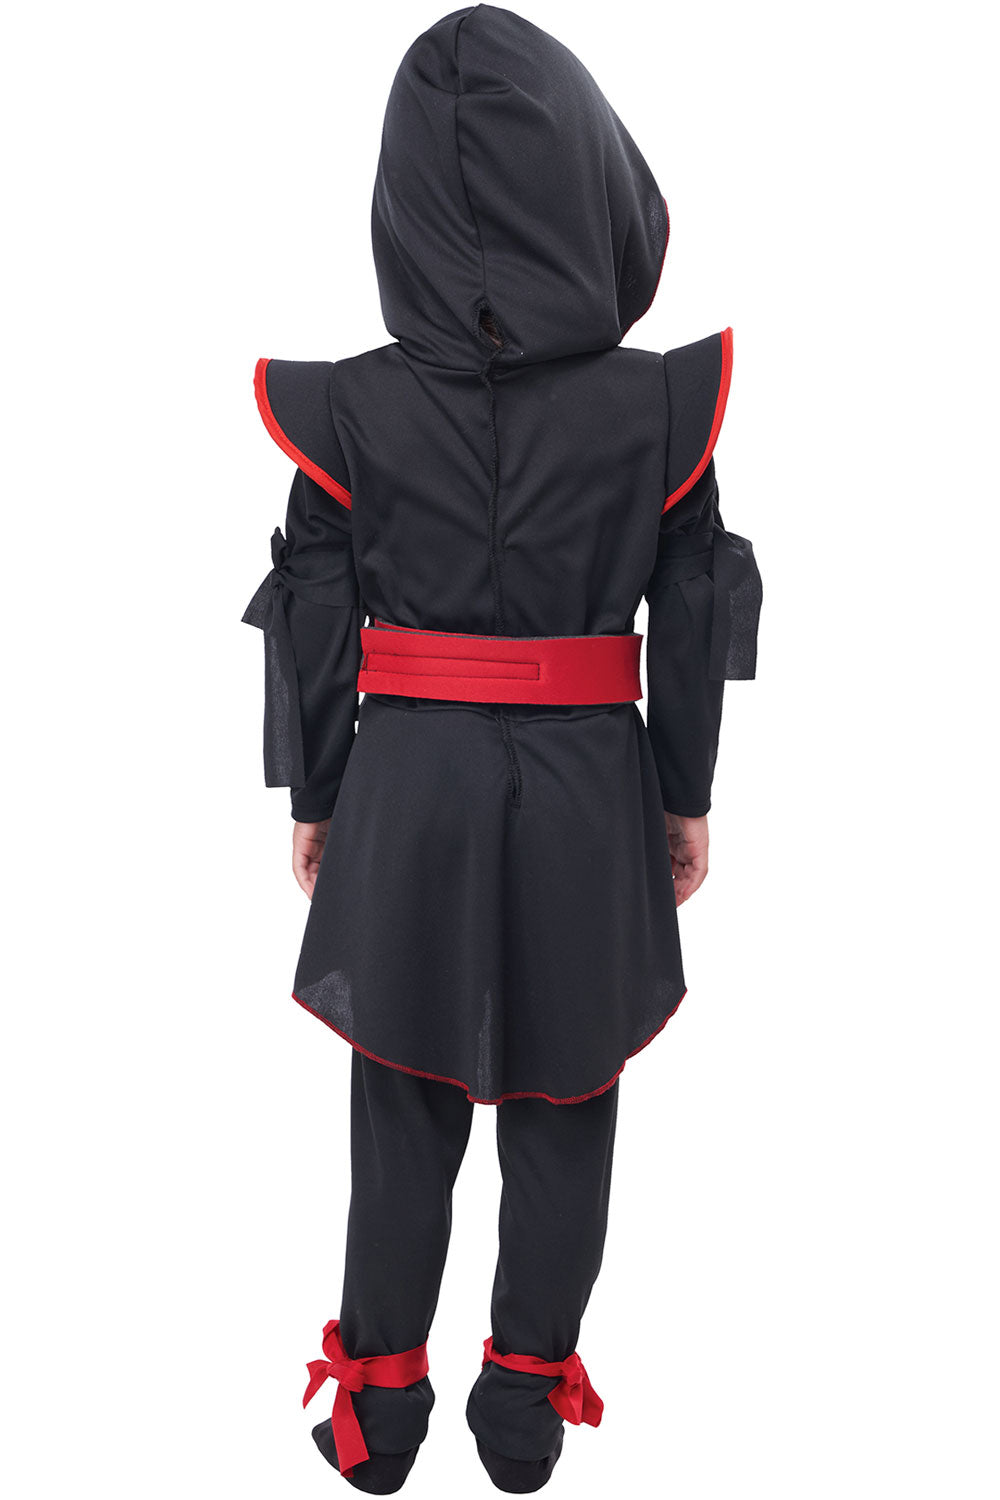 Lil' Ninja Girl / Toddler California Costume 2020/075